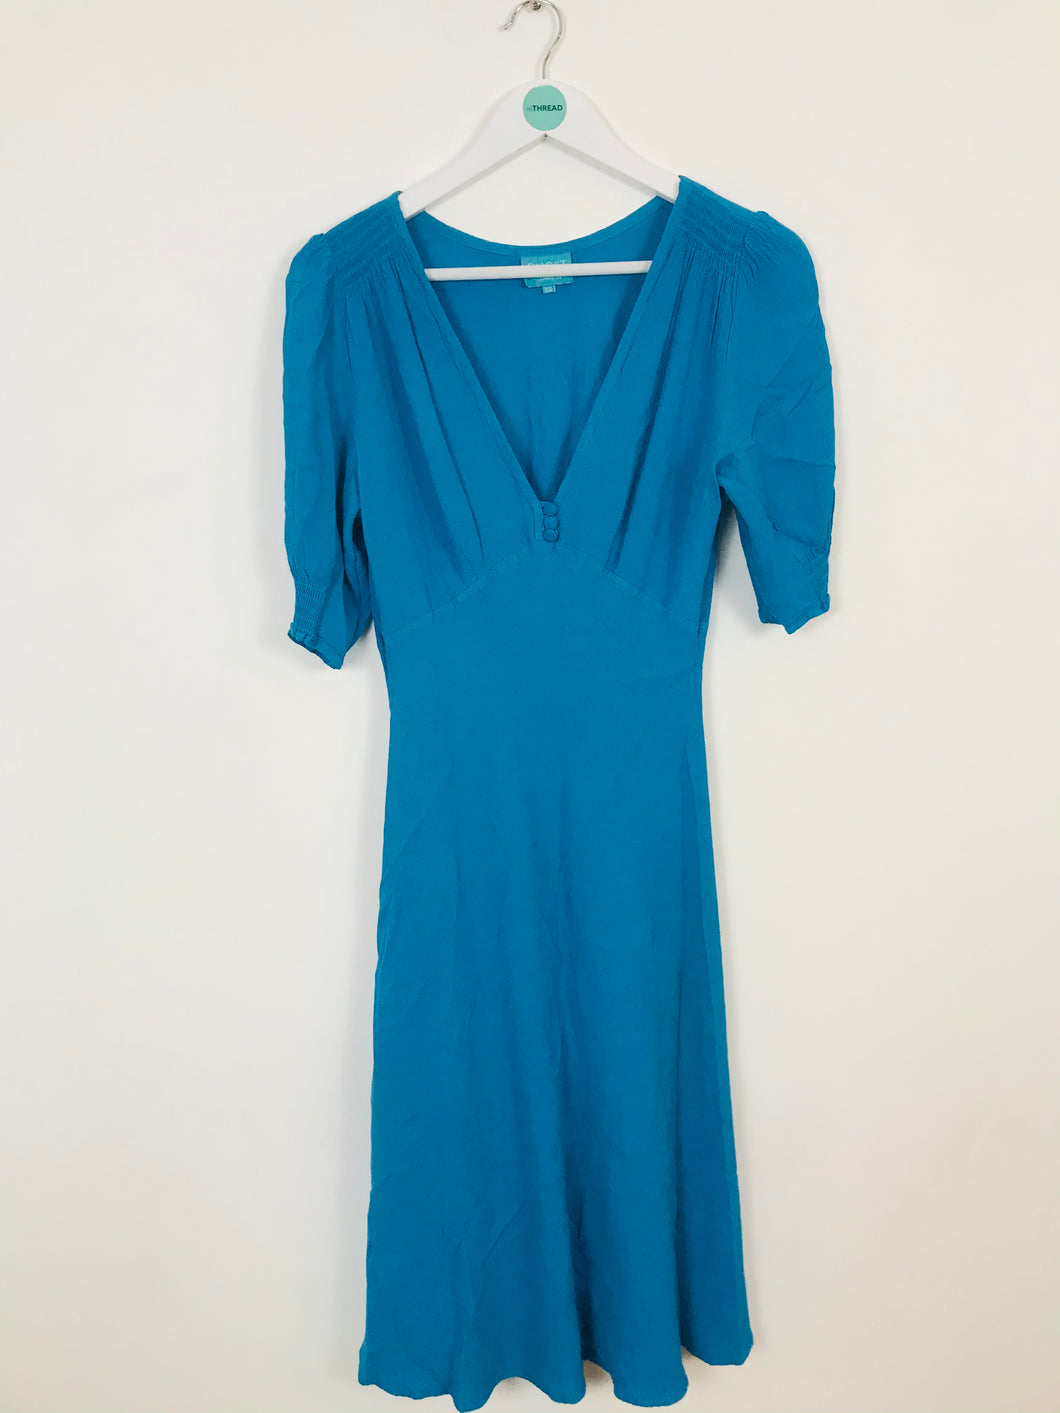 Ghost London Womens Midi Vintage A-Line Dress | XS UK6 | Blue